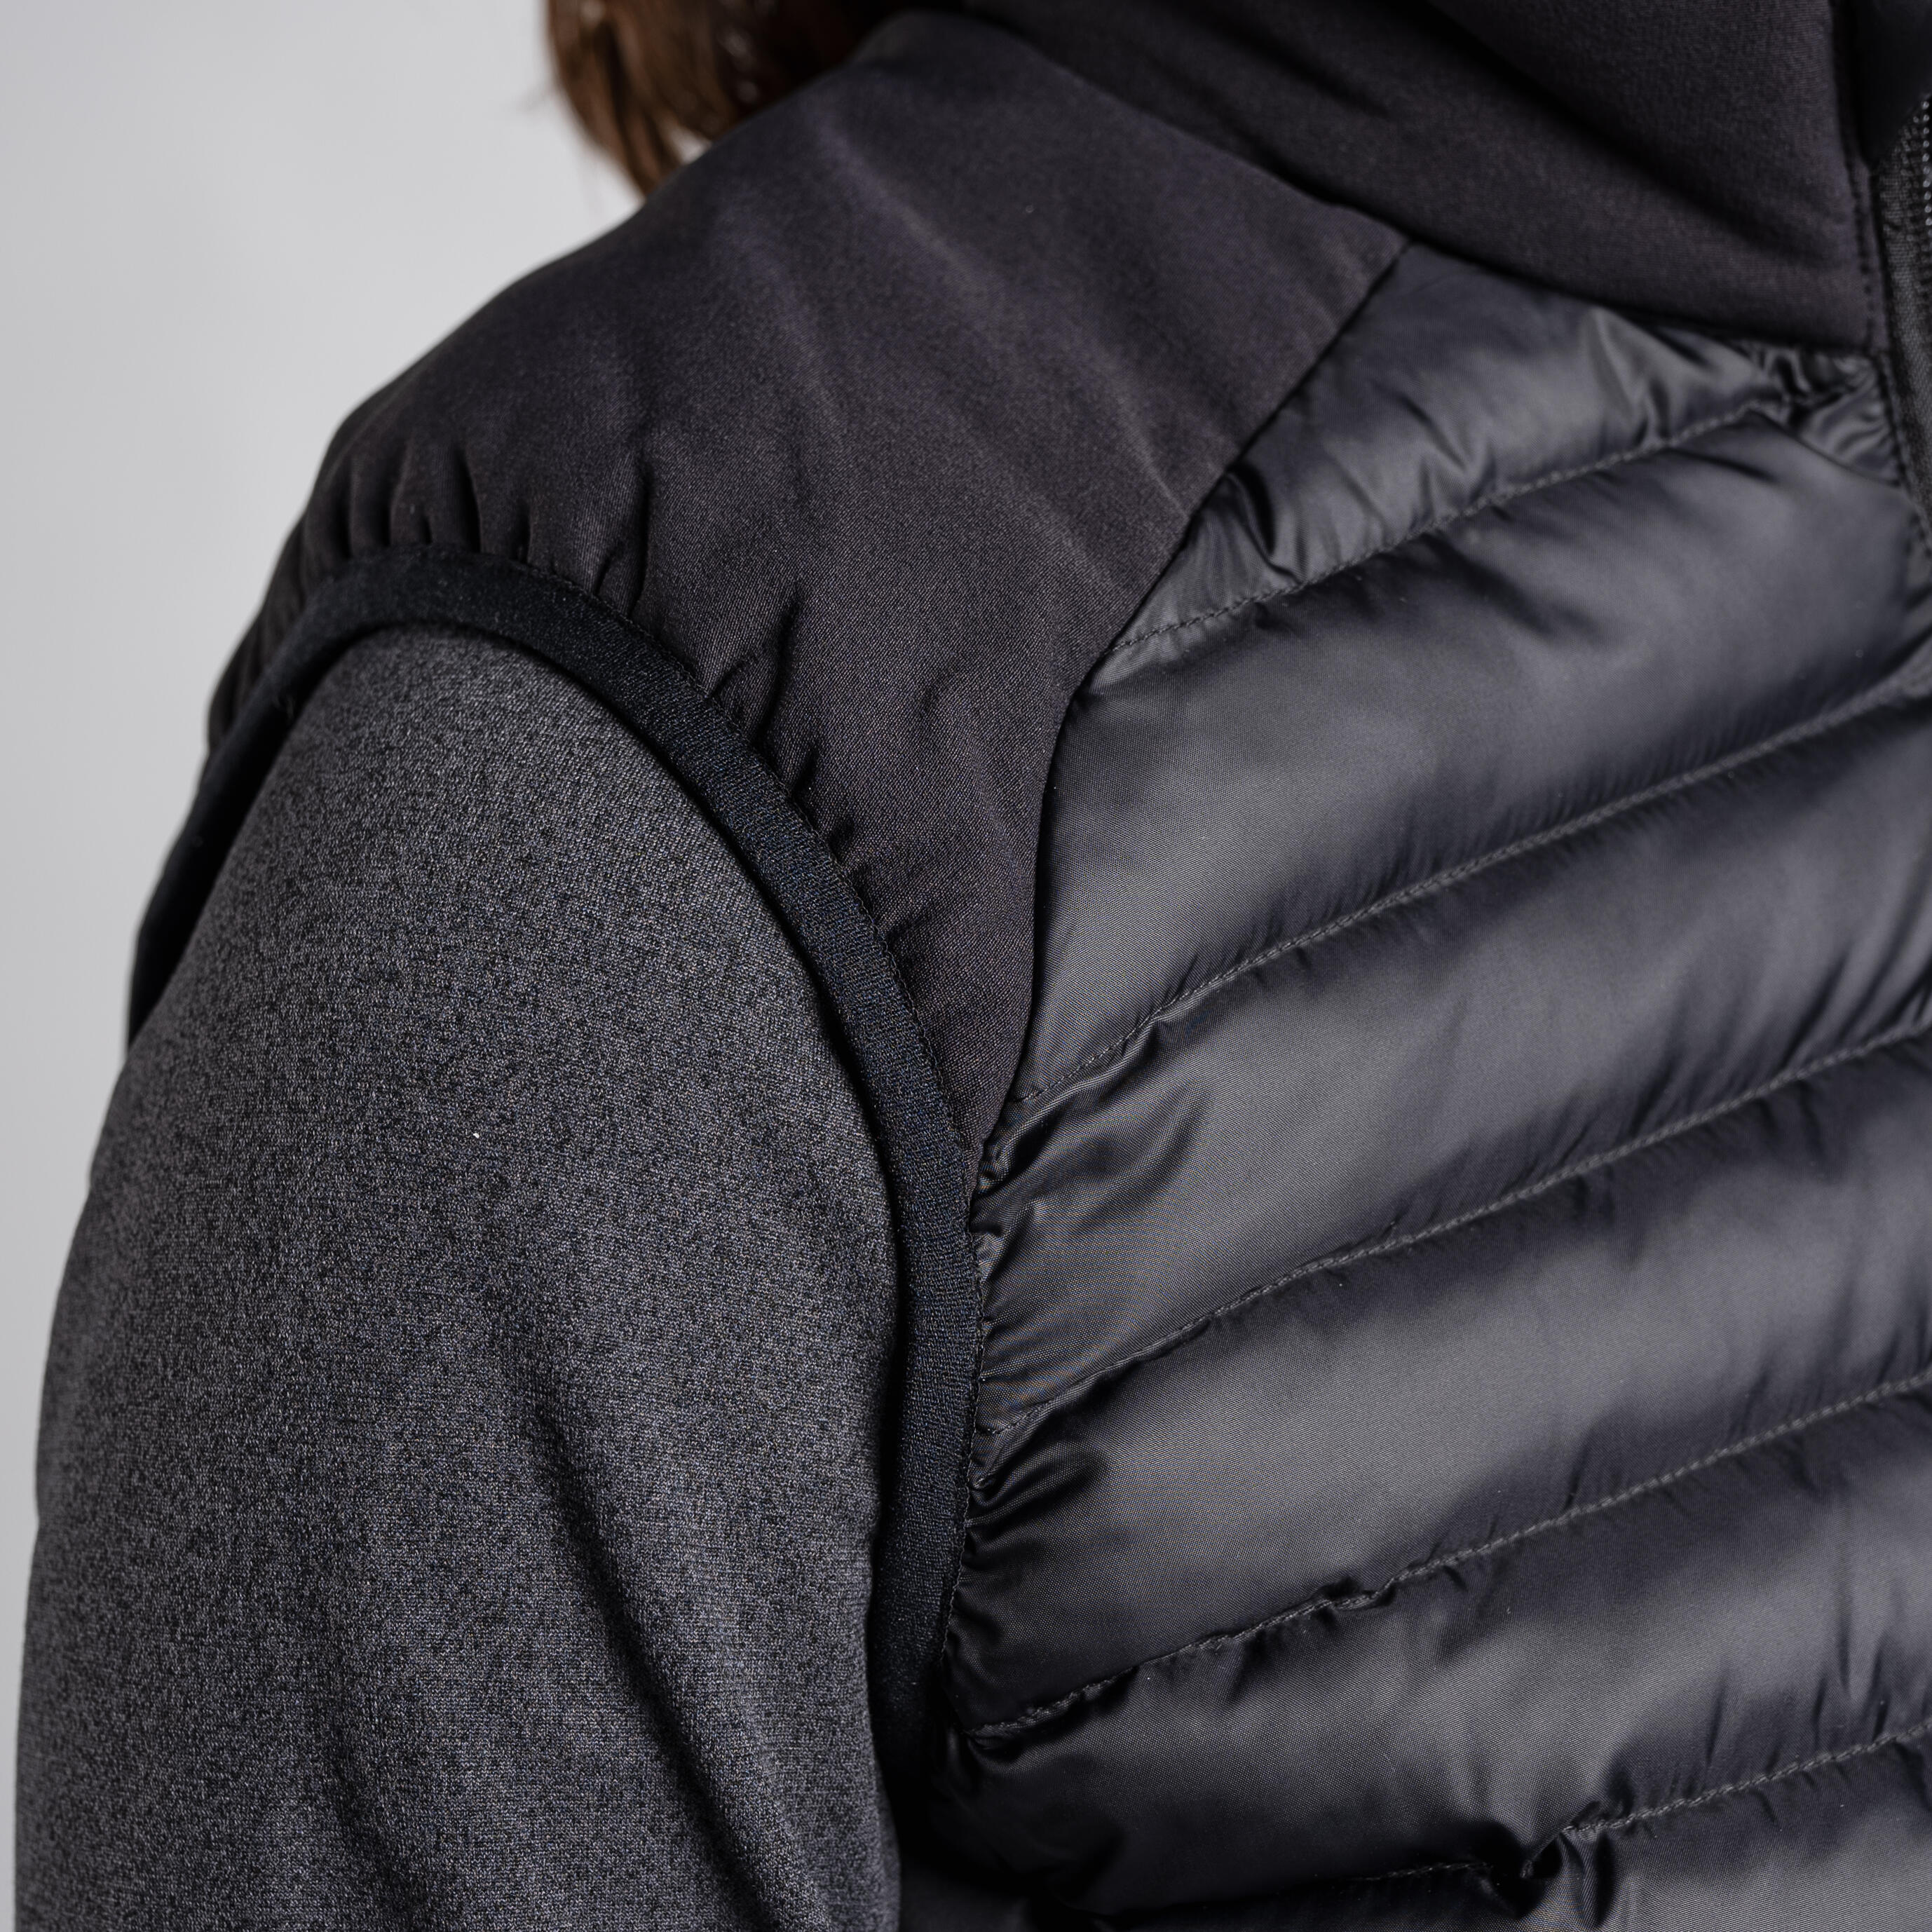 Women's golf winter sleeveless padded jacket CW500 black 6/8